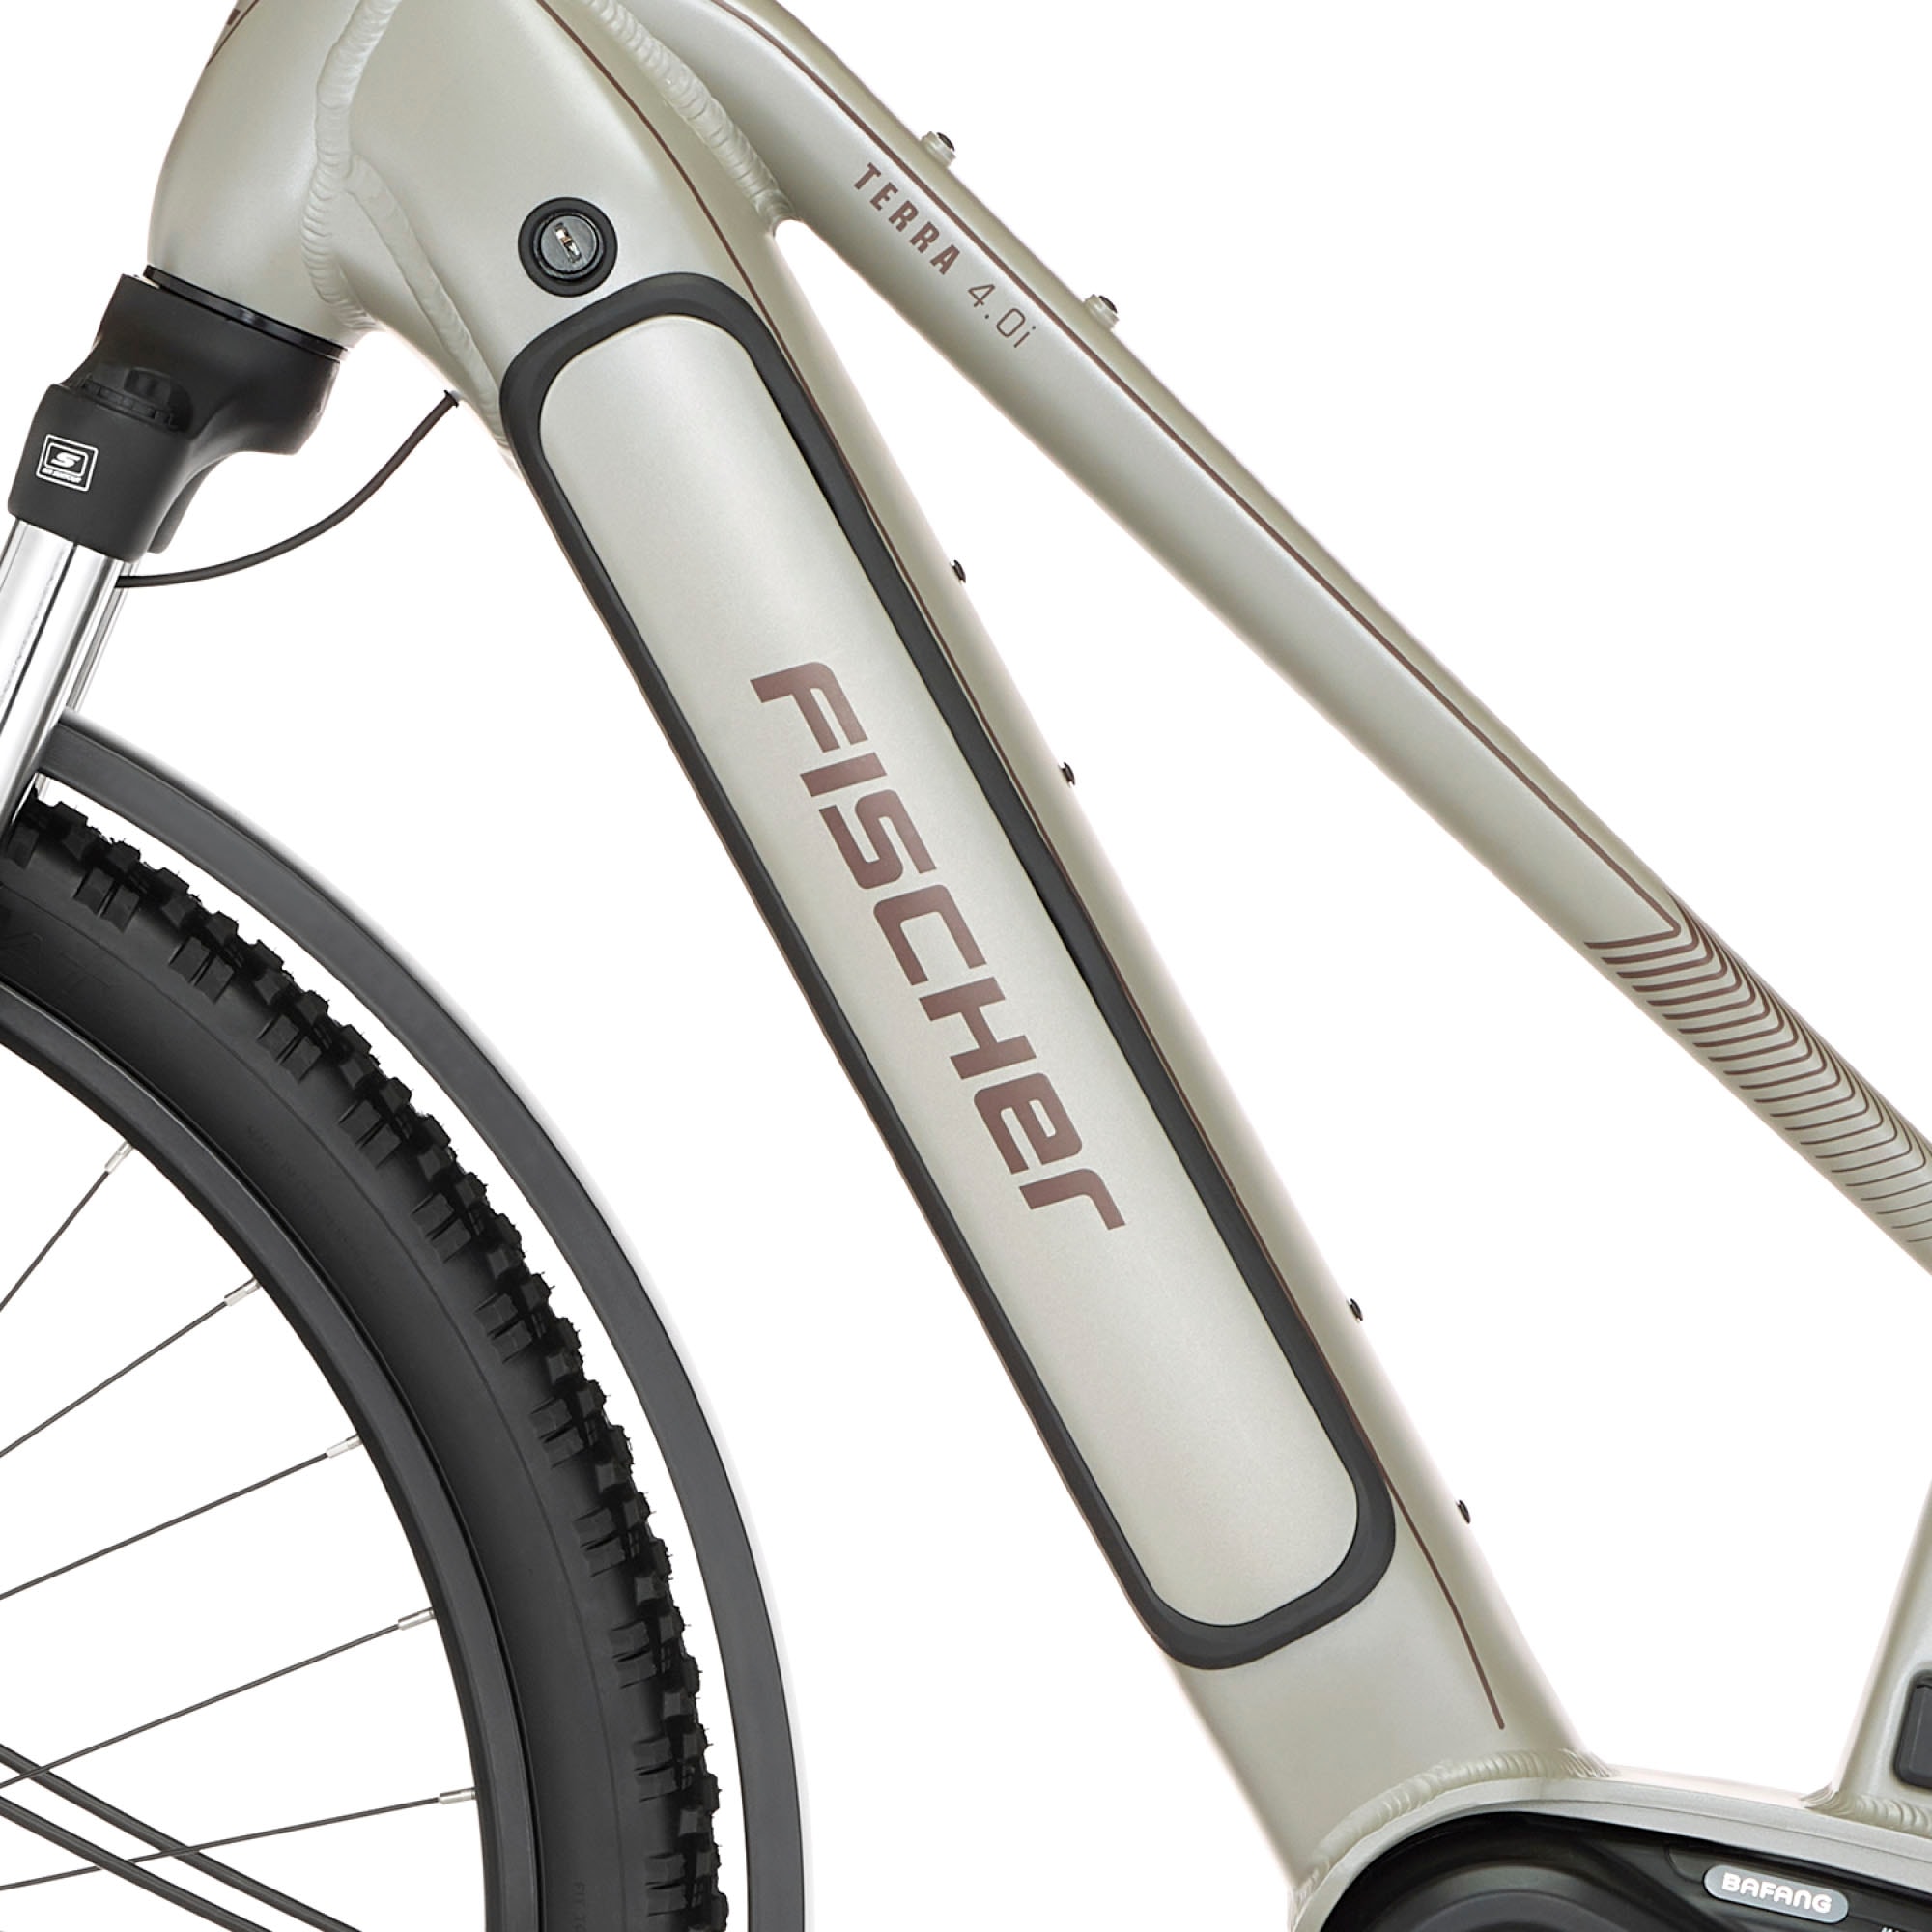 FISCHER Fahrrad E-Bike »TERRA 4.0i 45«, 10 Gang, Shimano, Deore, Mittelmotor 250 W, (mit Fahrradschloss)